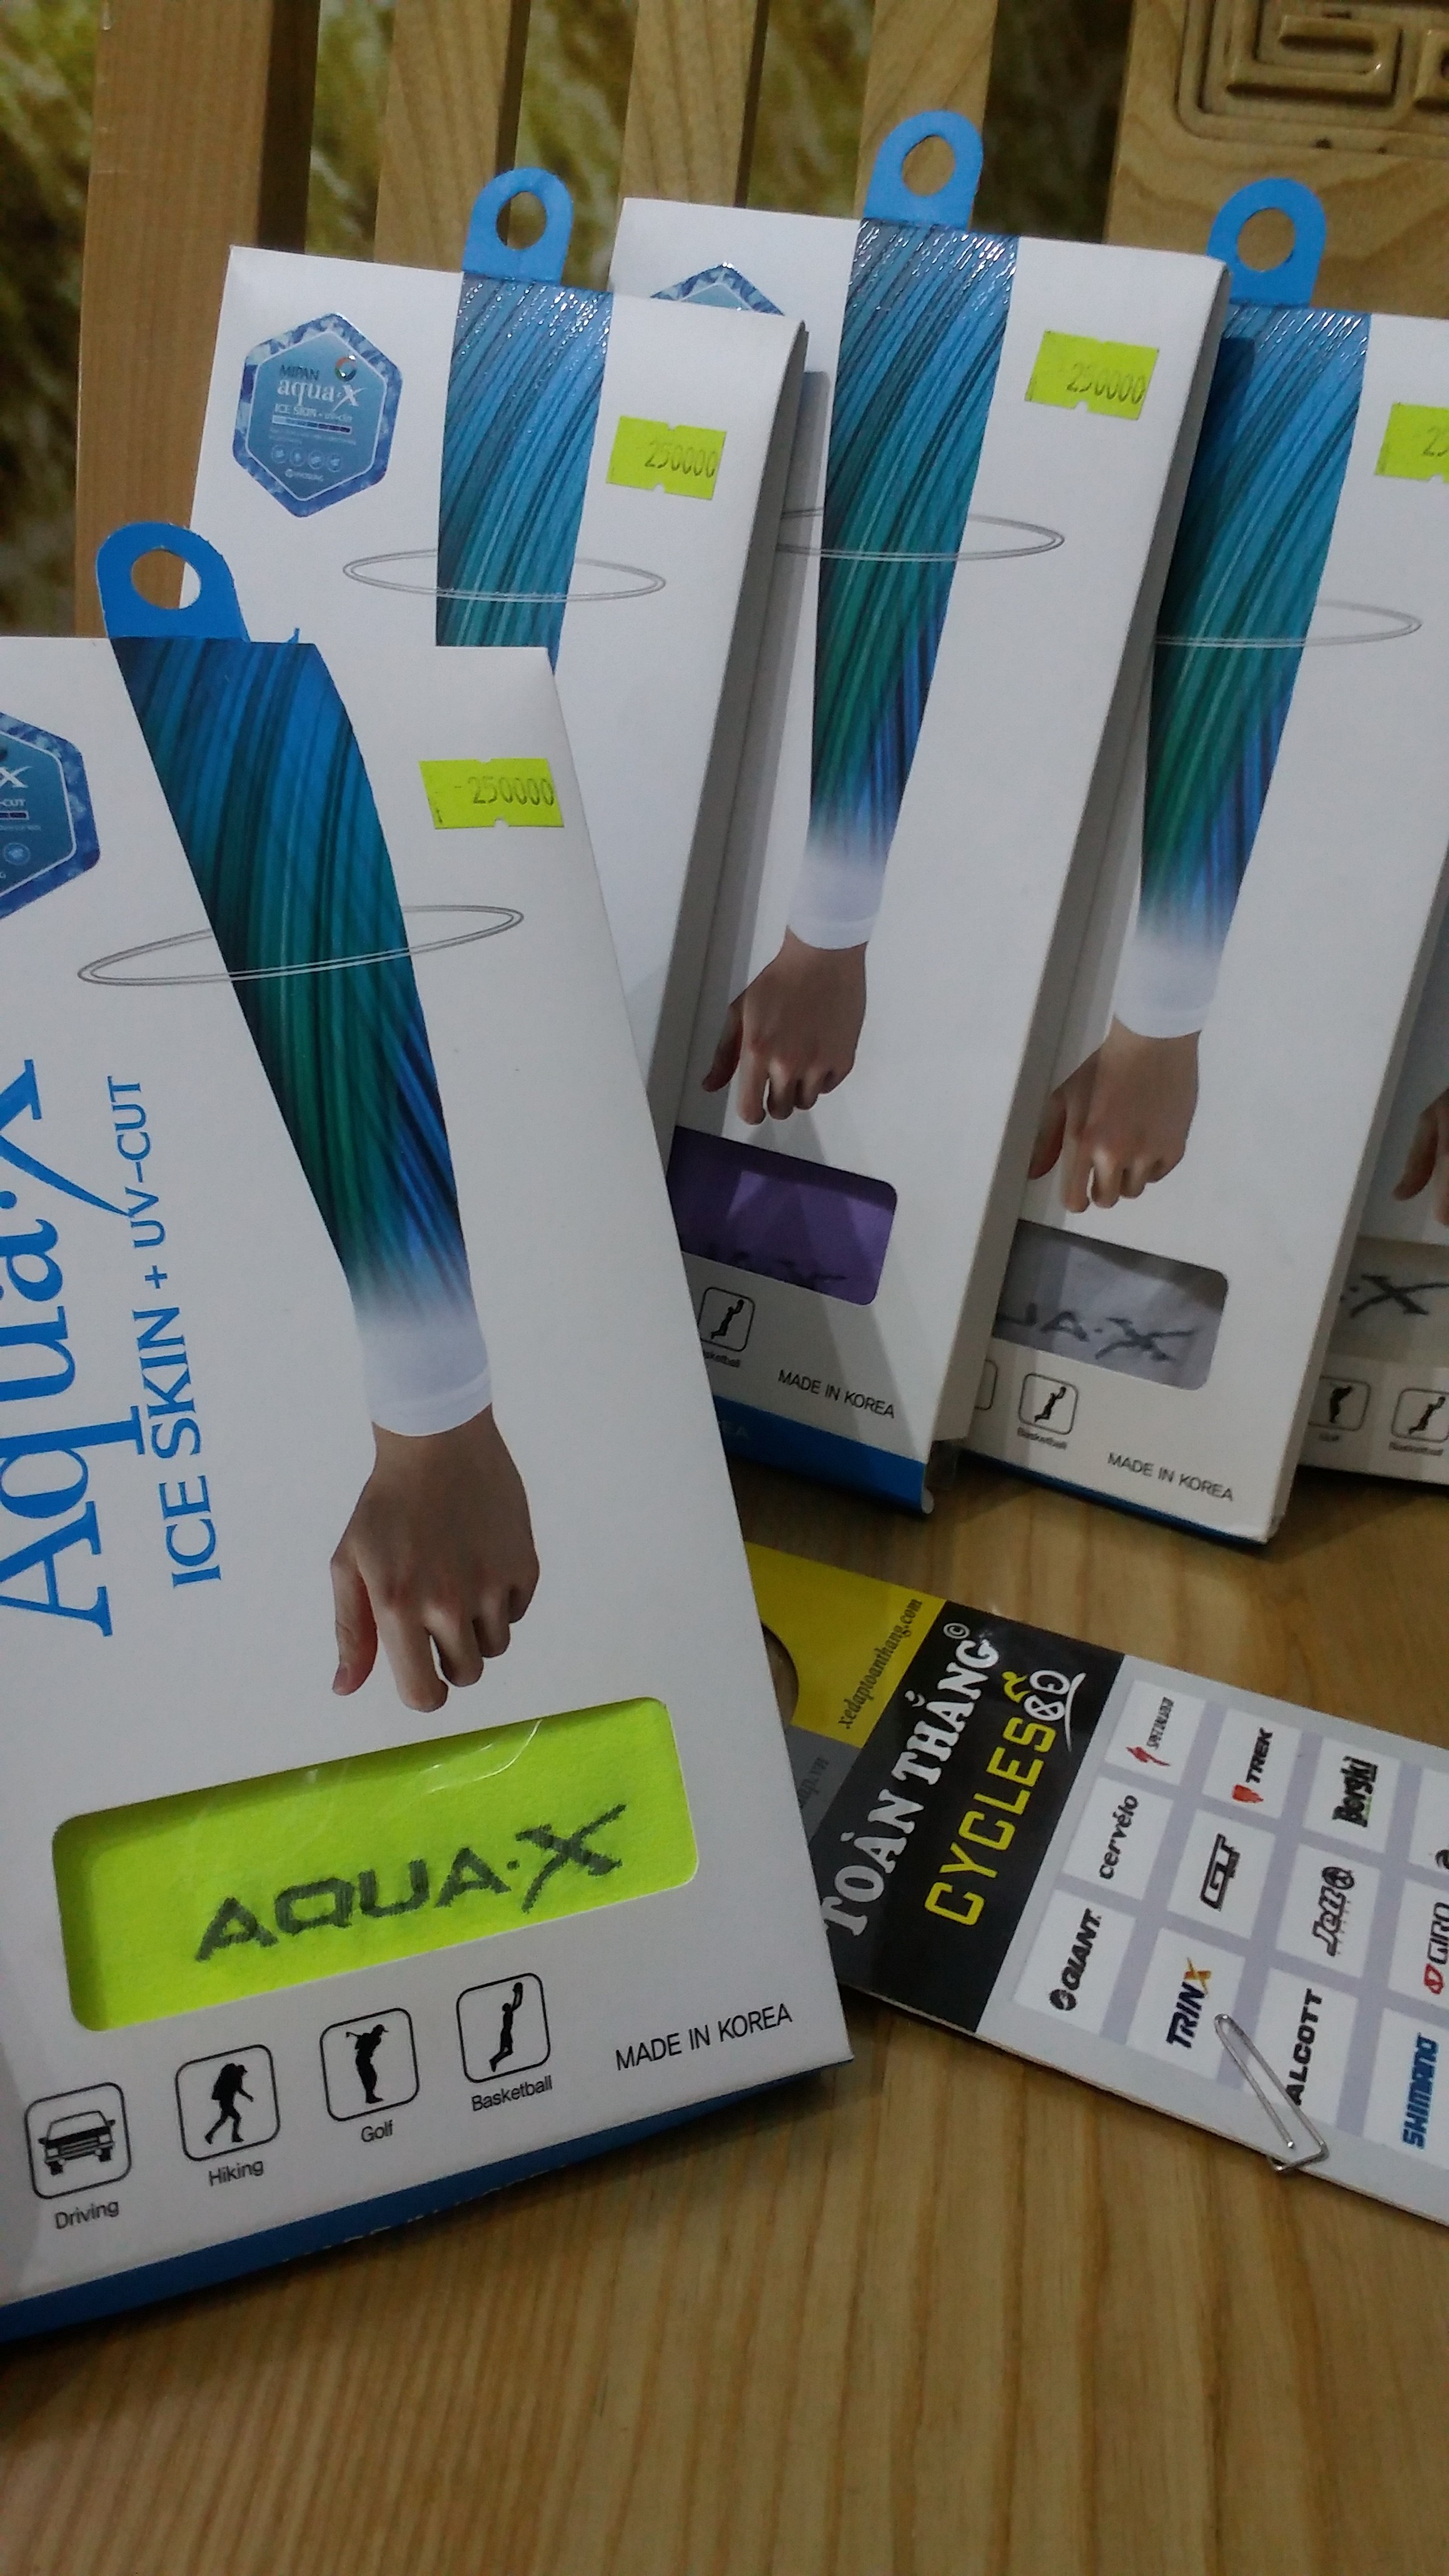 Ống tay Hàn Quốc AQUA-X ICE SKIN- UV CUT ARM (Cặp)